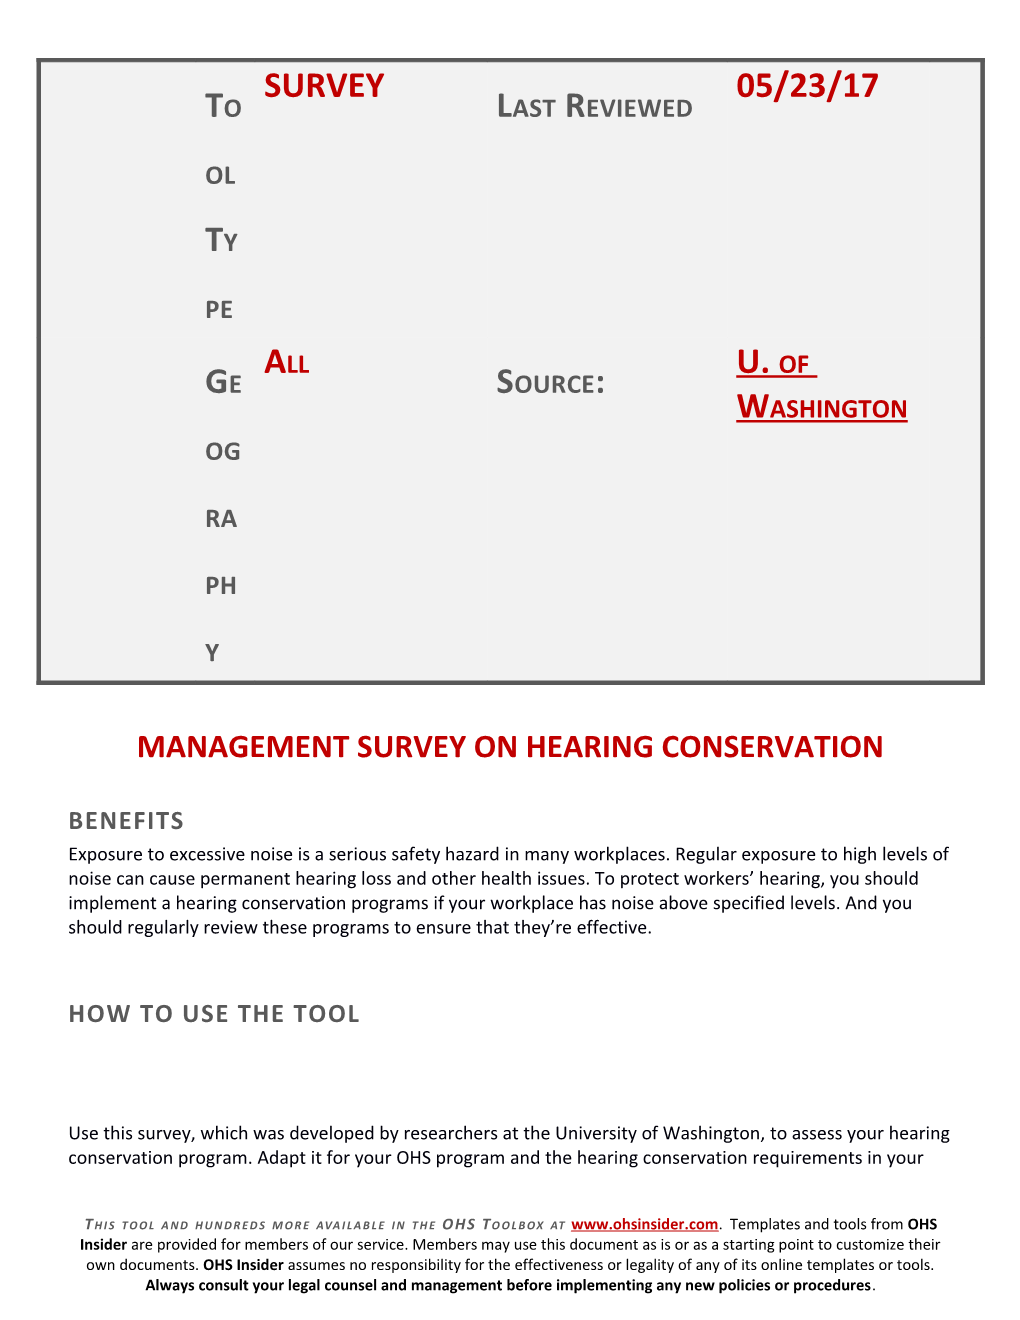 Management Survey on Hearing Conservation